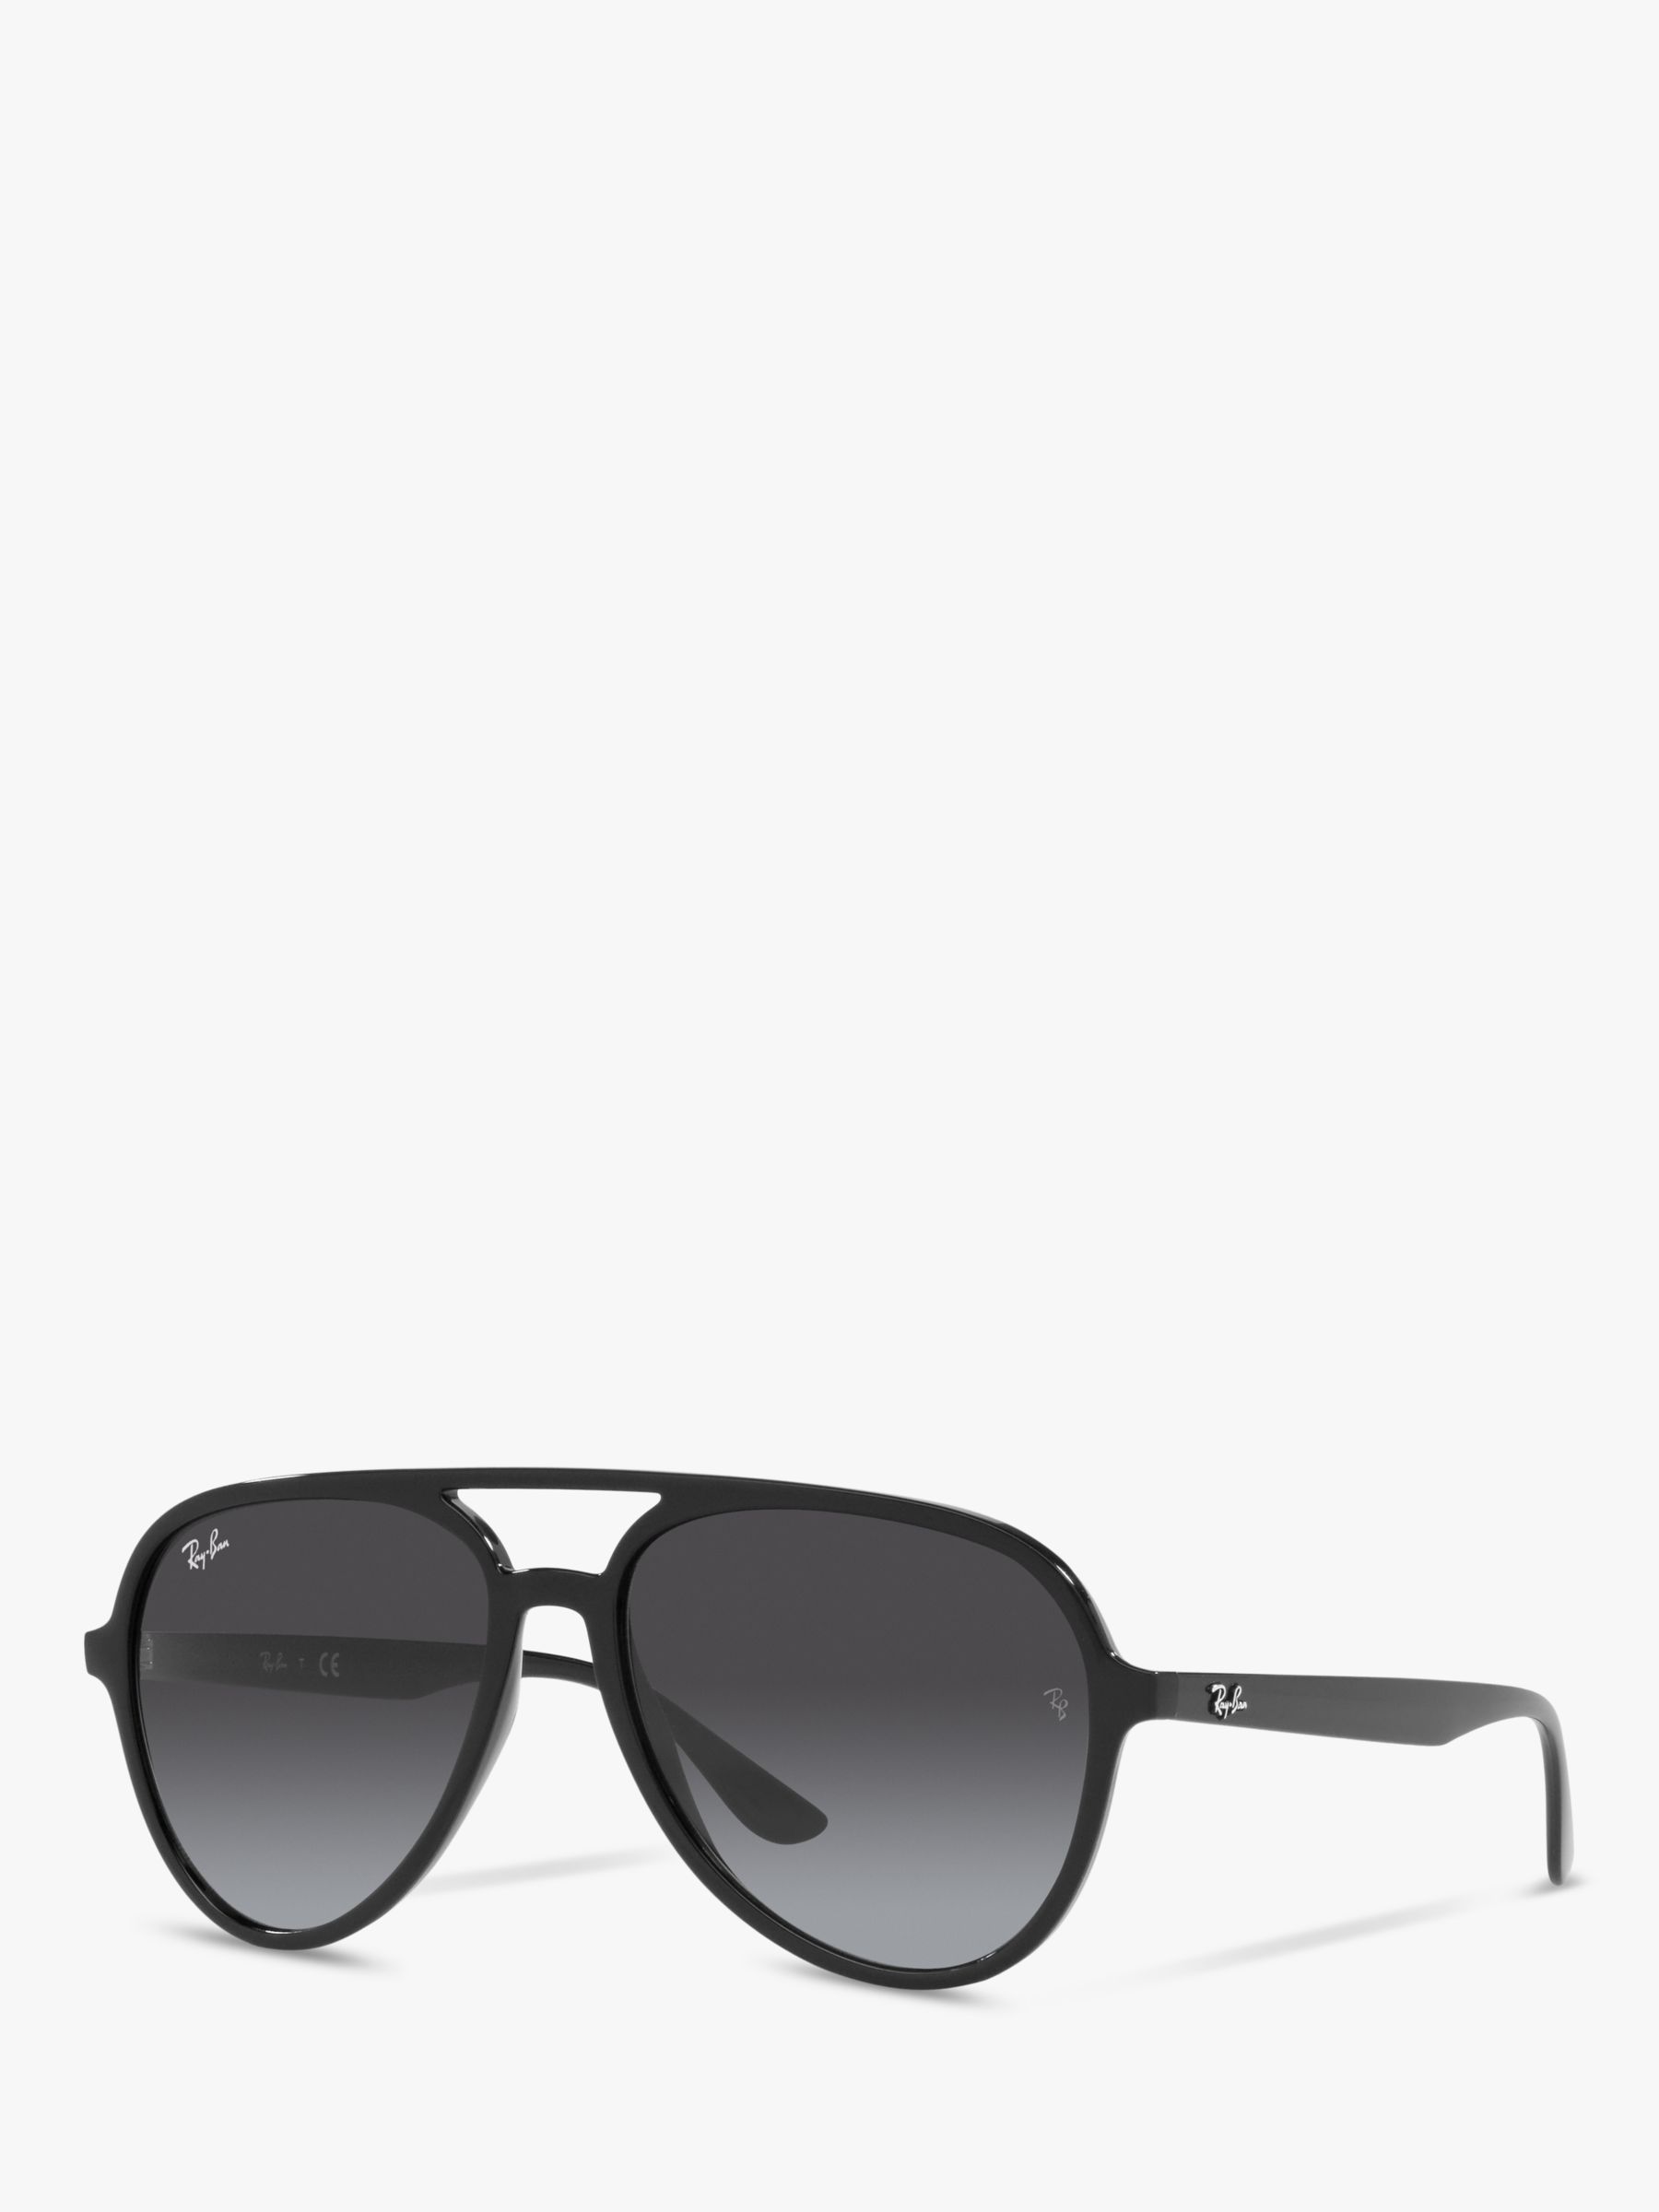 Ray-Ban RB4376 Unisex Aviator Sunglasses, Black/Grey Gradient